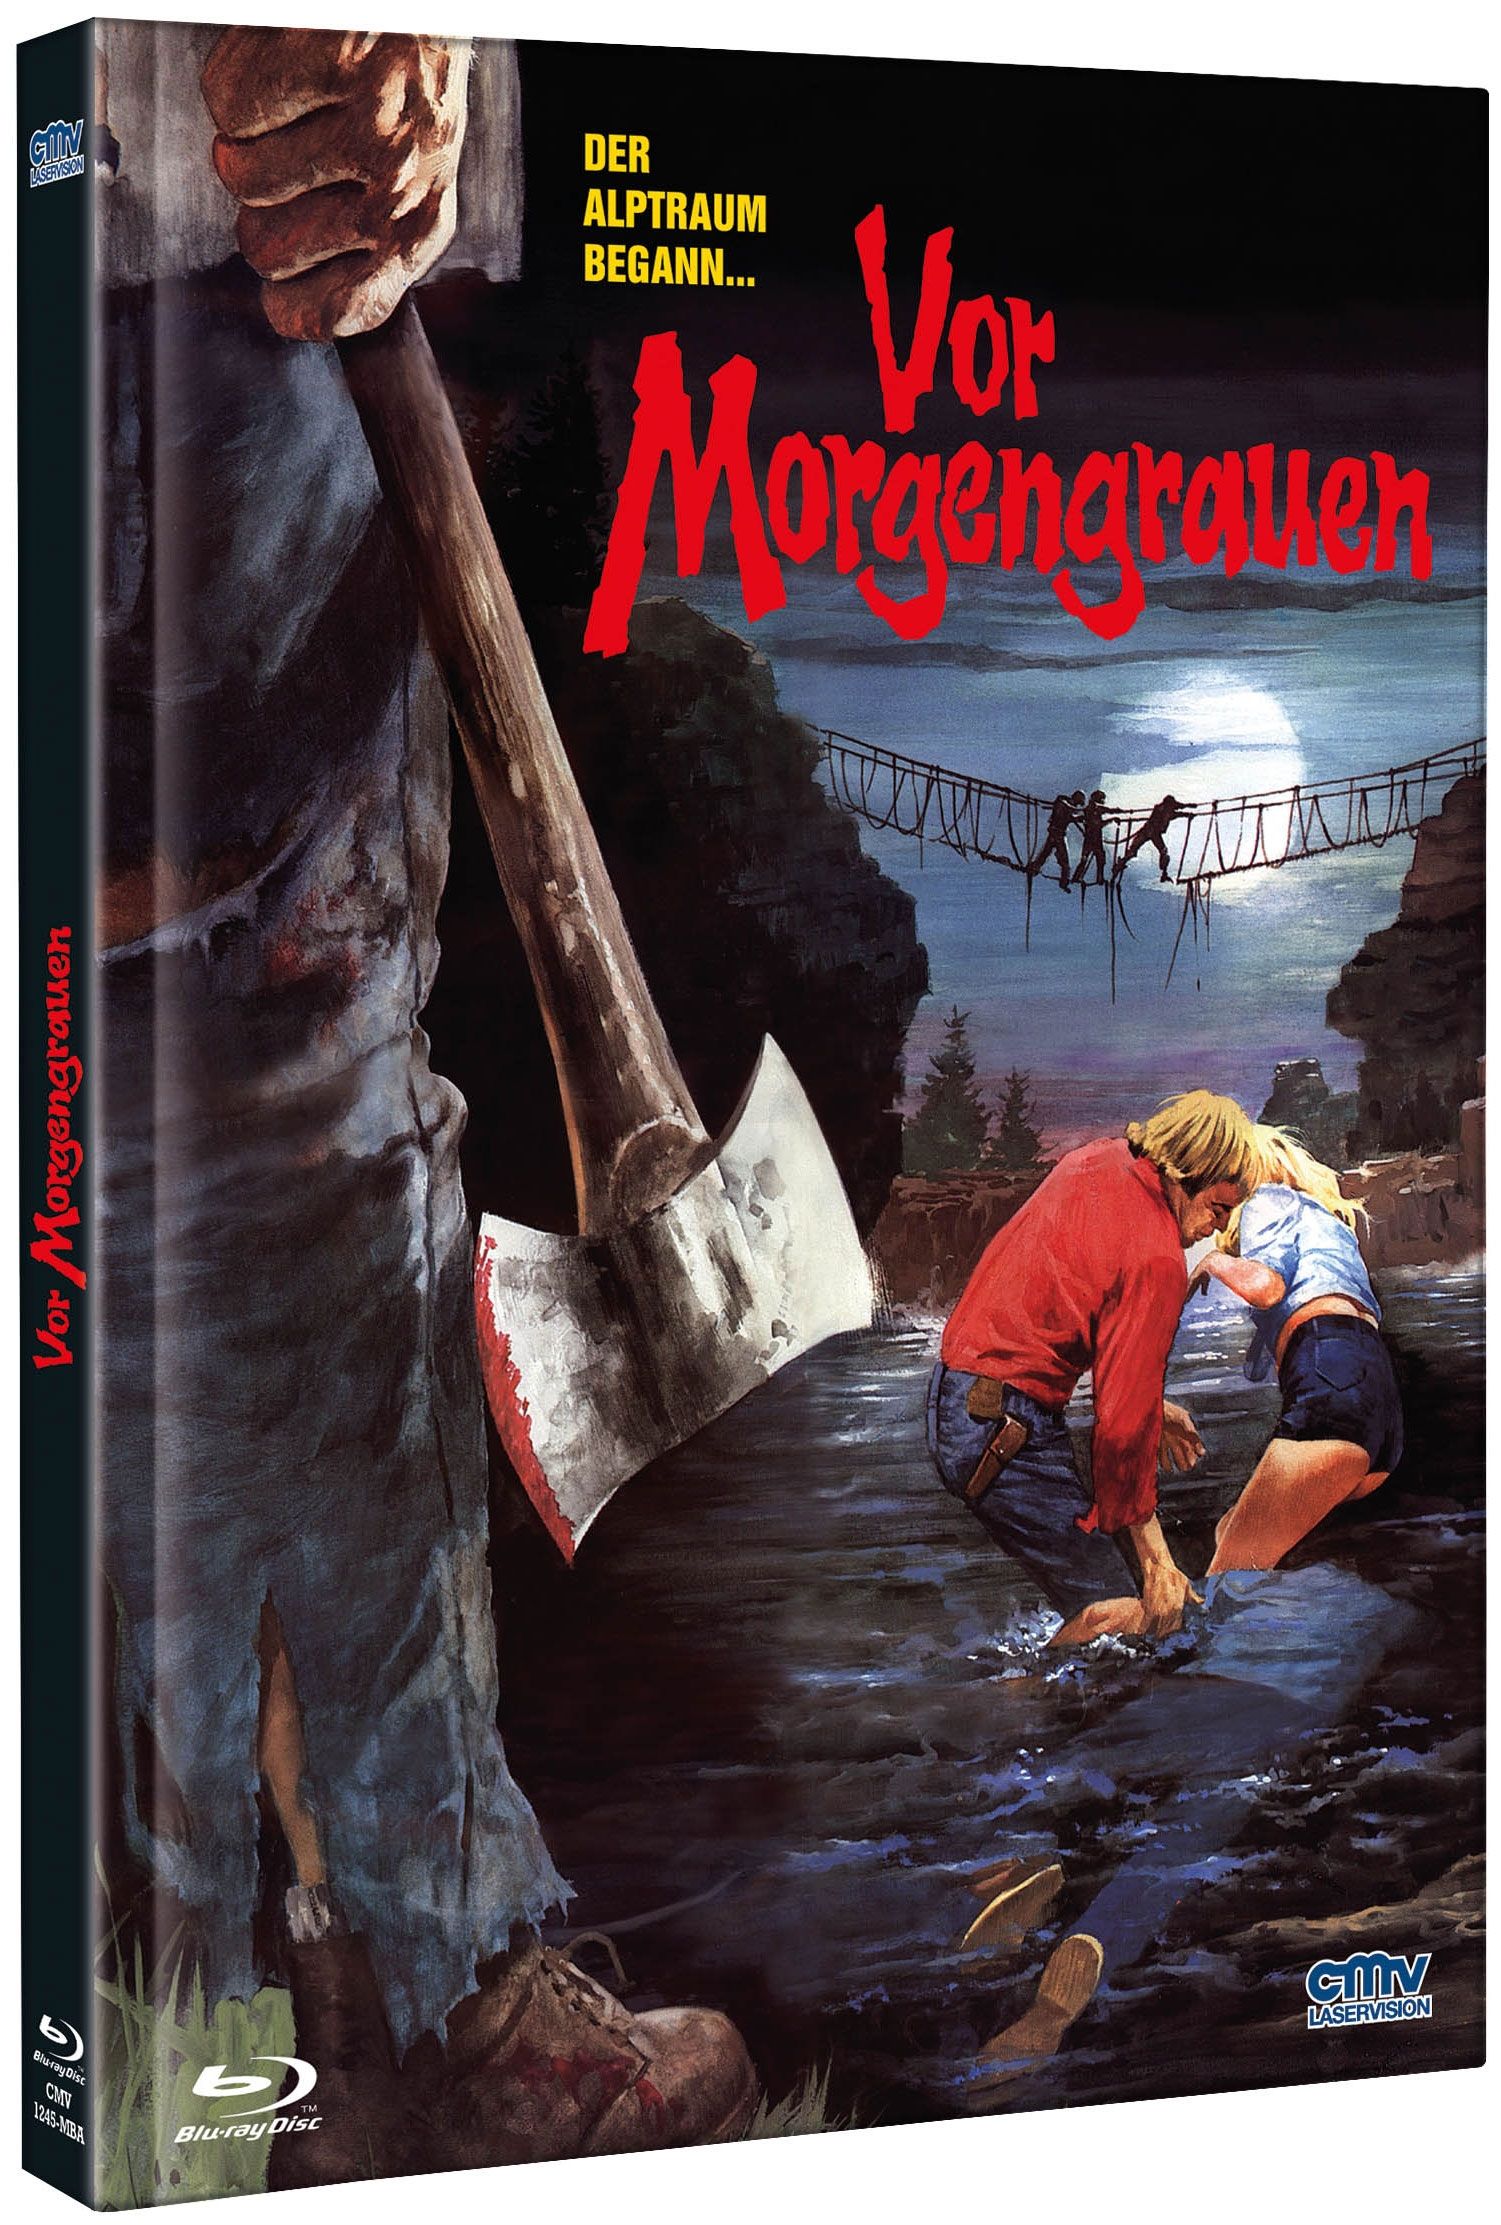 Vor Morgengrauen (Lim. Uncut Mediabook - Cover A) (DVD + BLURAY)